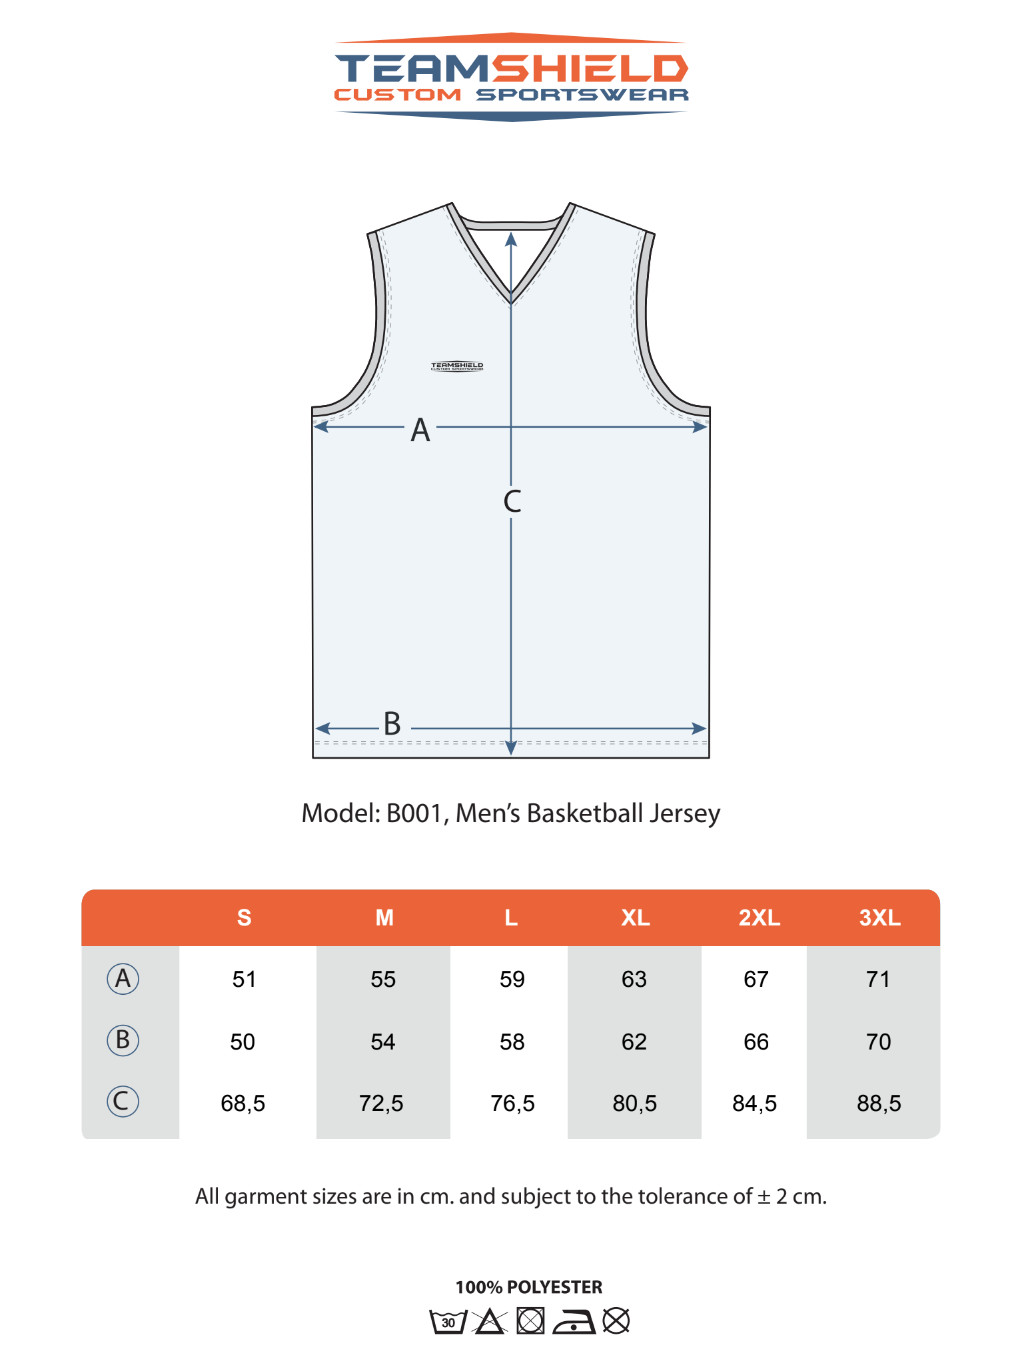 JerseyKing Sportswear - Basketball Jersey Size Chart